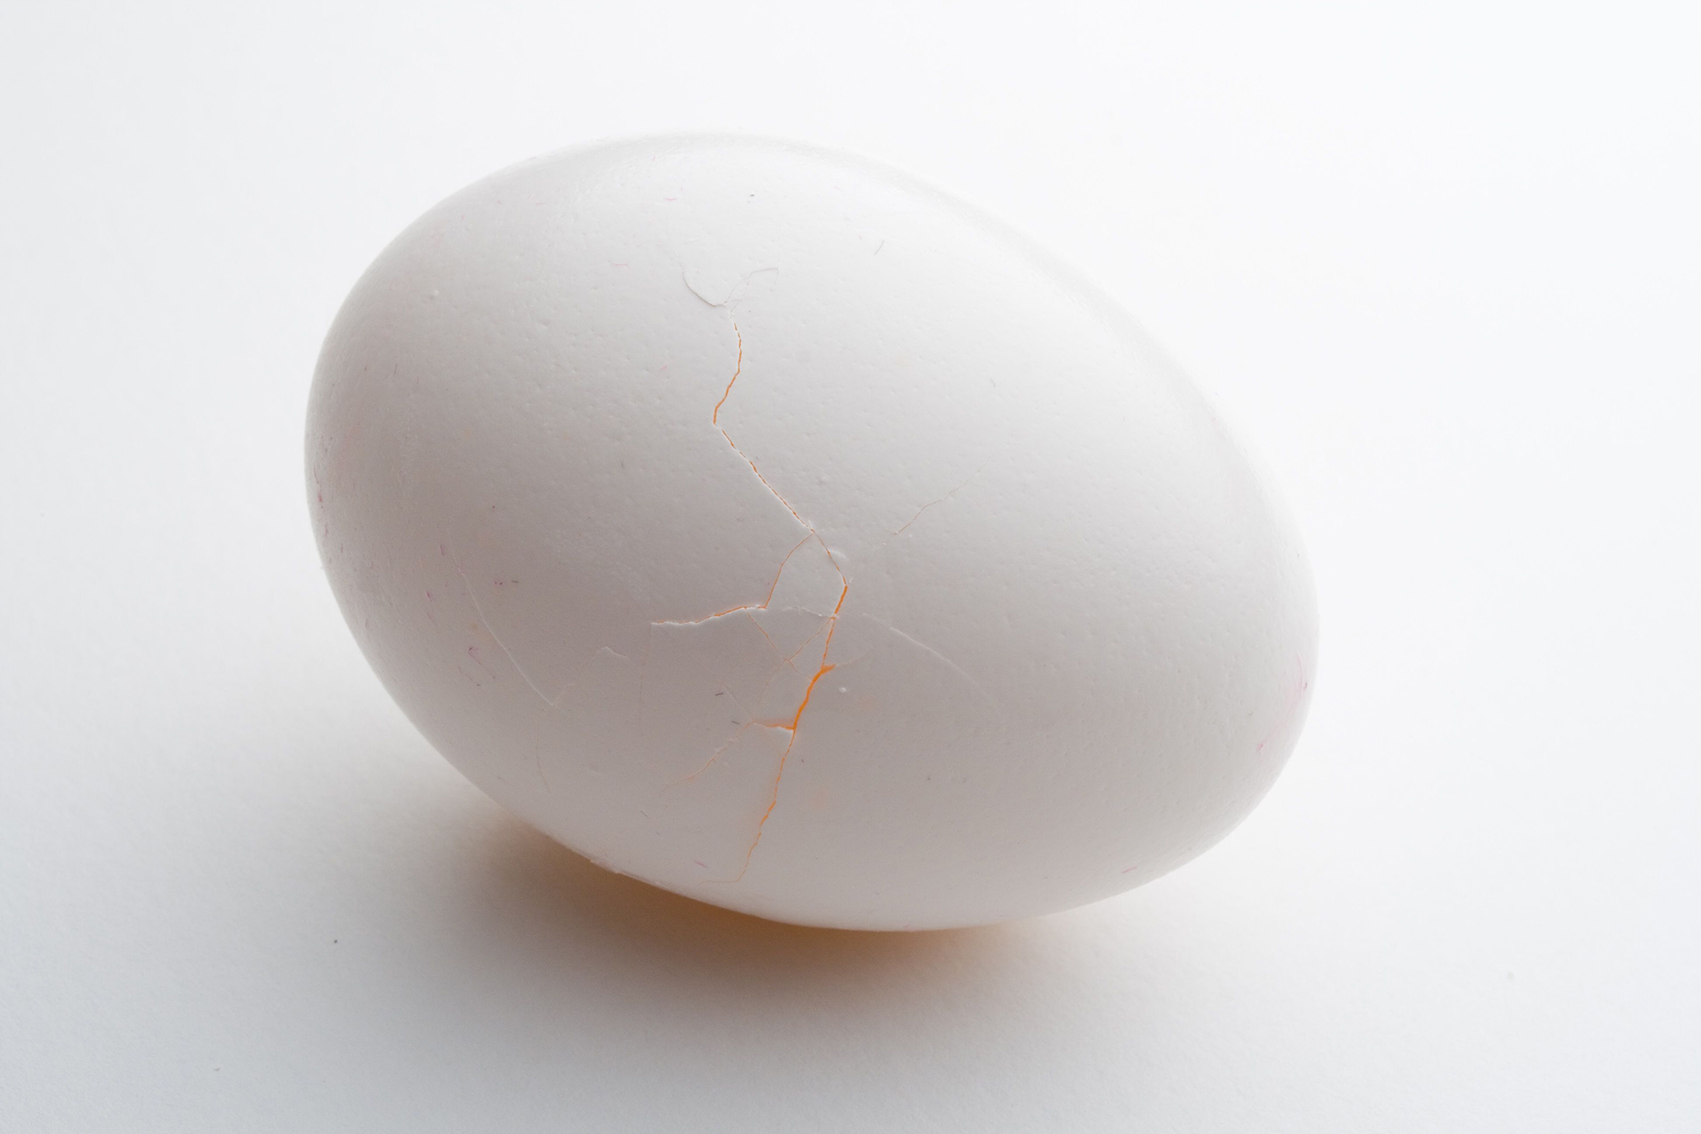 cracked egg royalty free image 1701455845 | چگونه از تخم نطفه دار ترک خورده (شکسته) جوجه کشی کنیم؟